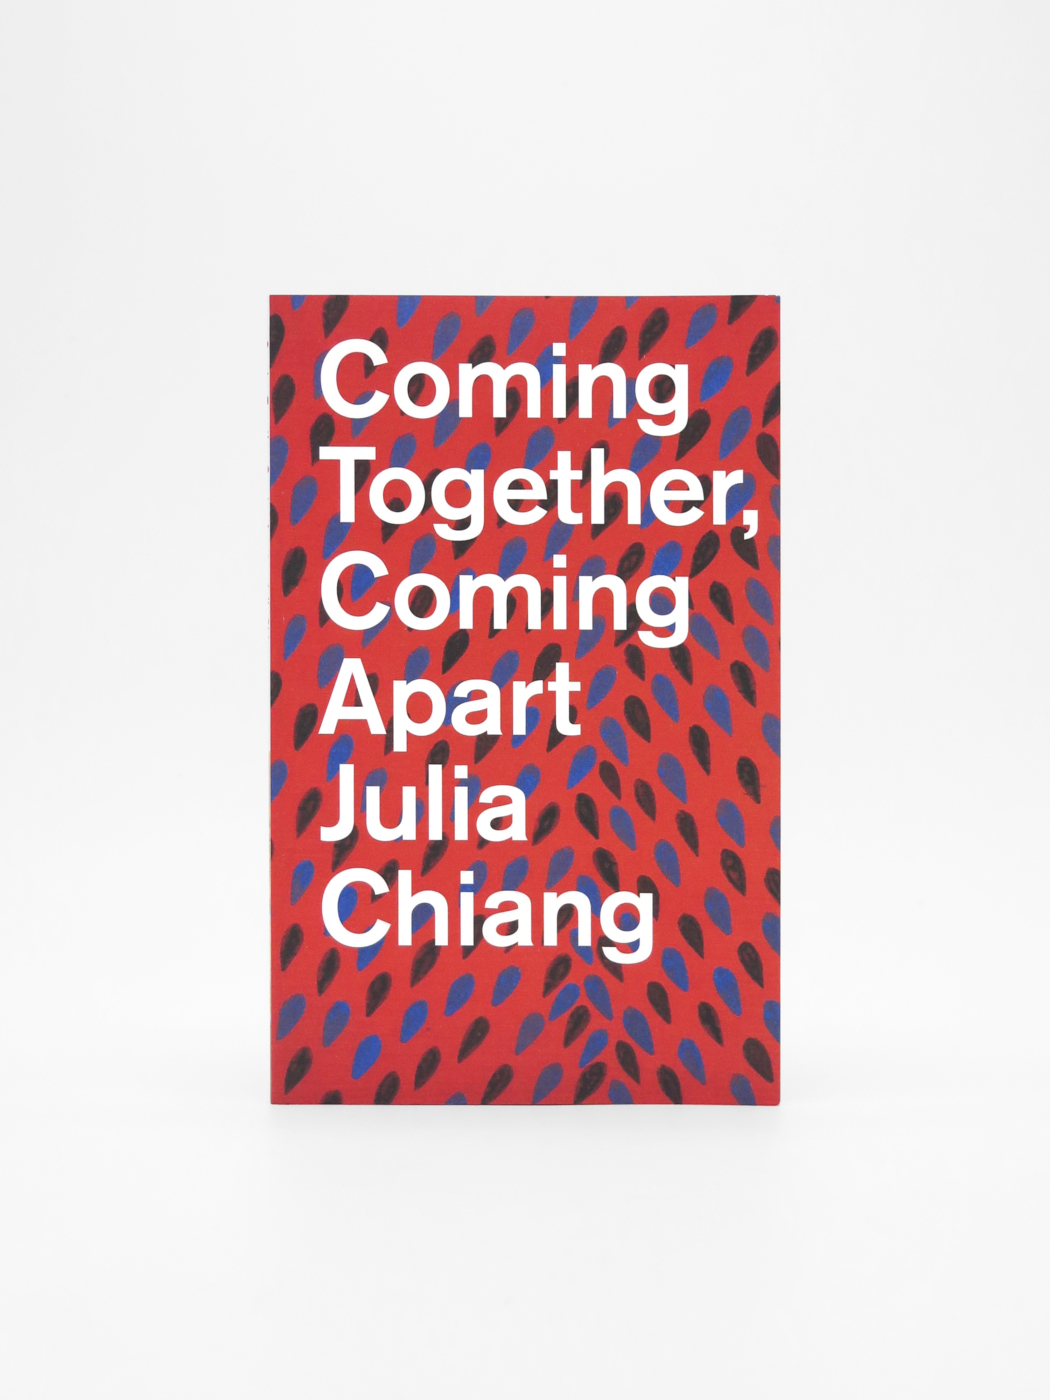 Julia Chiang, Coming Together, Coming Apart